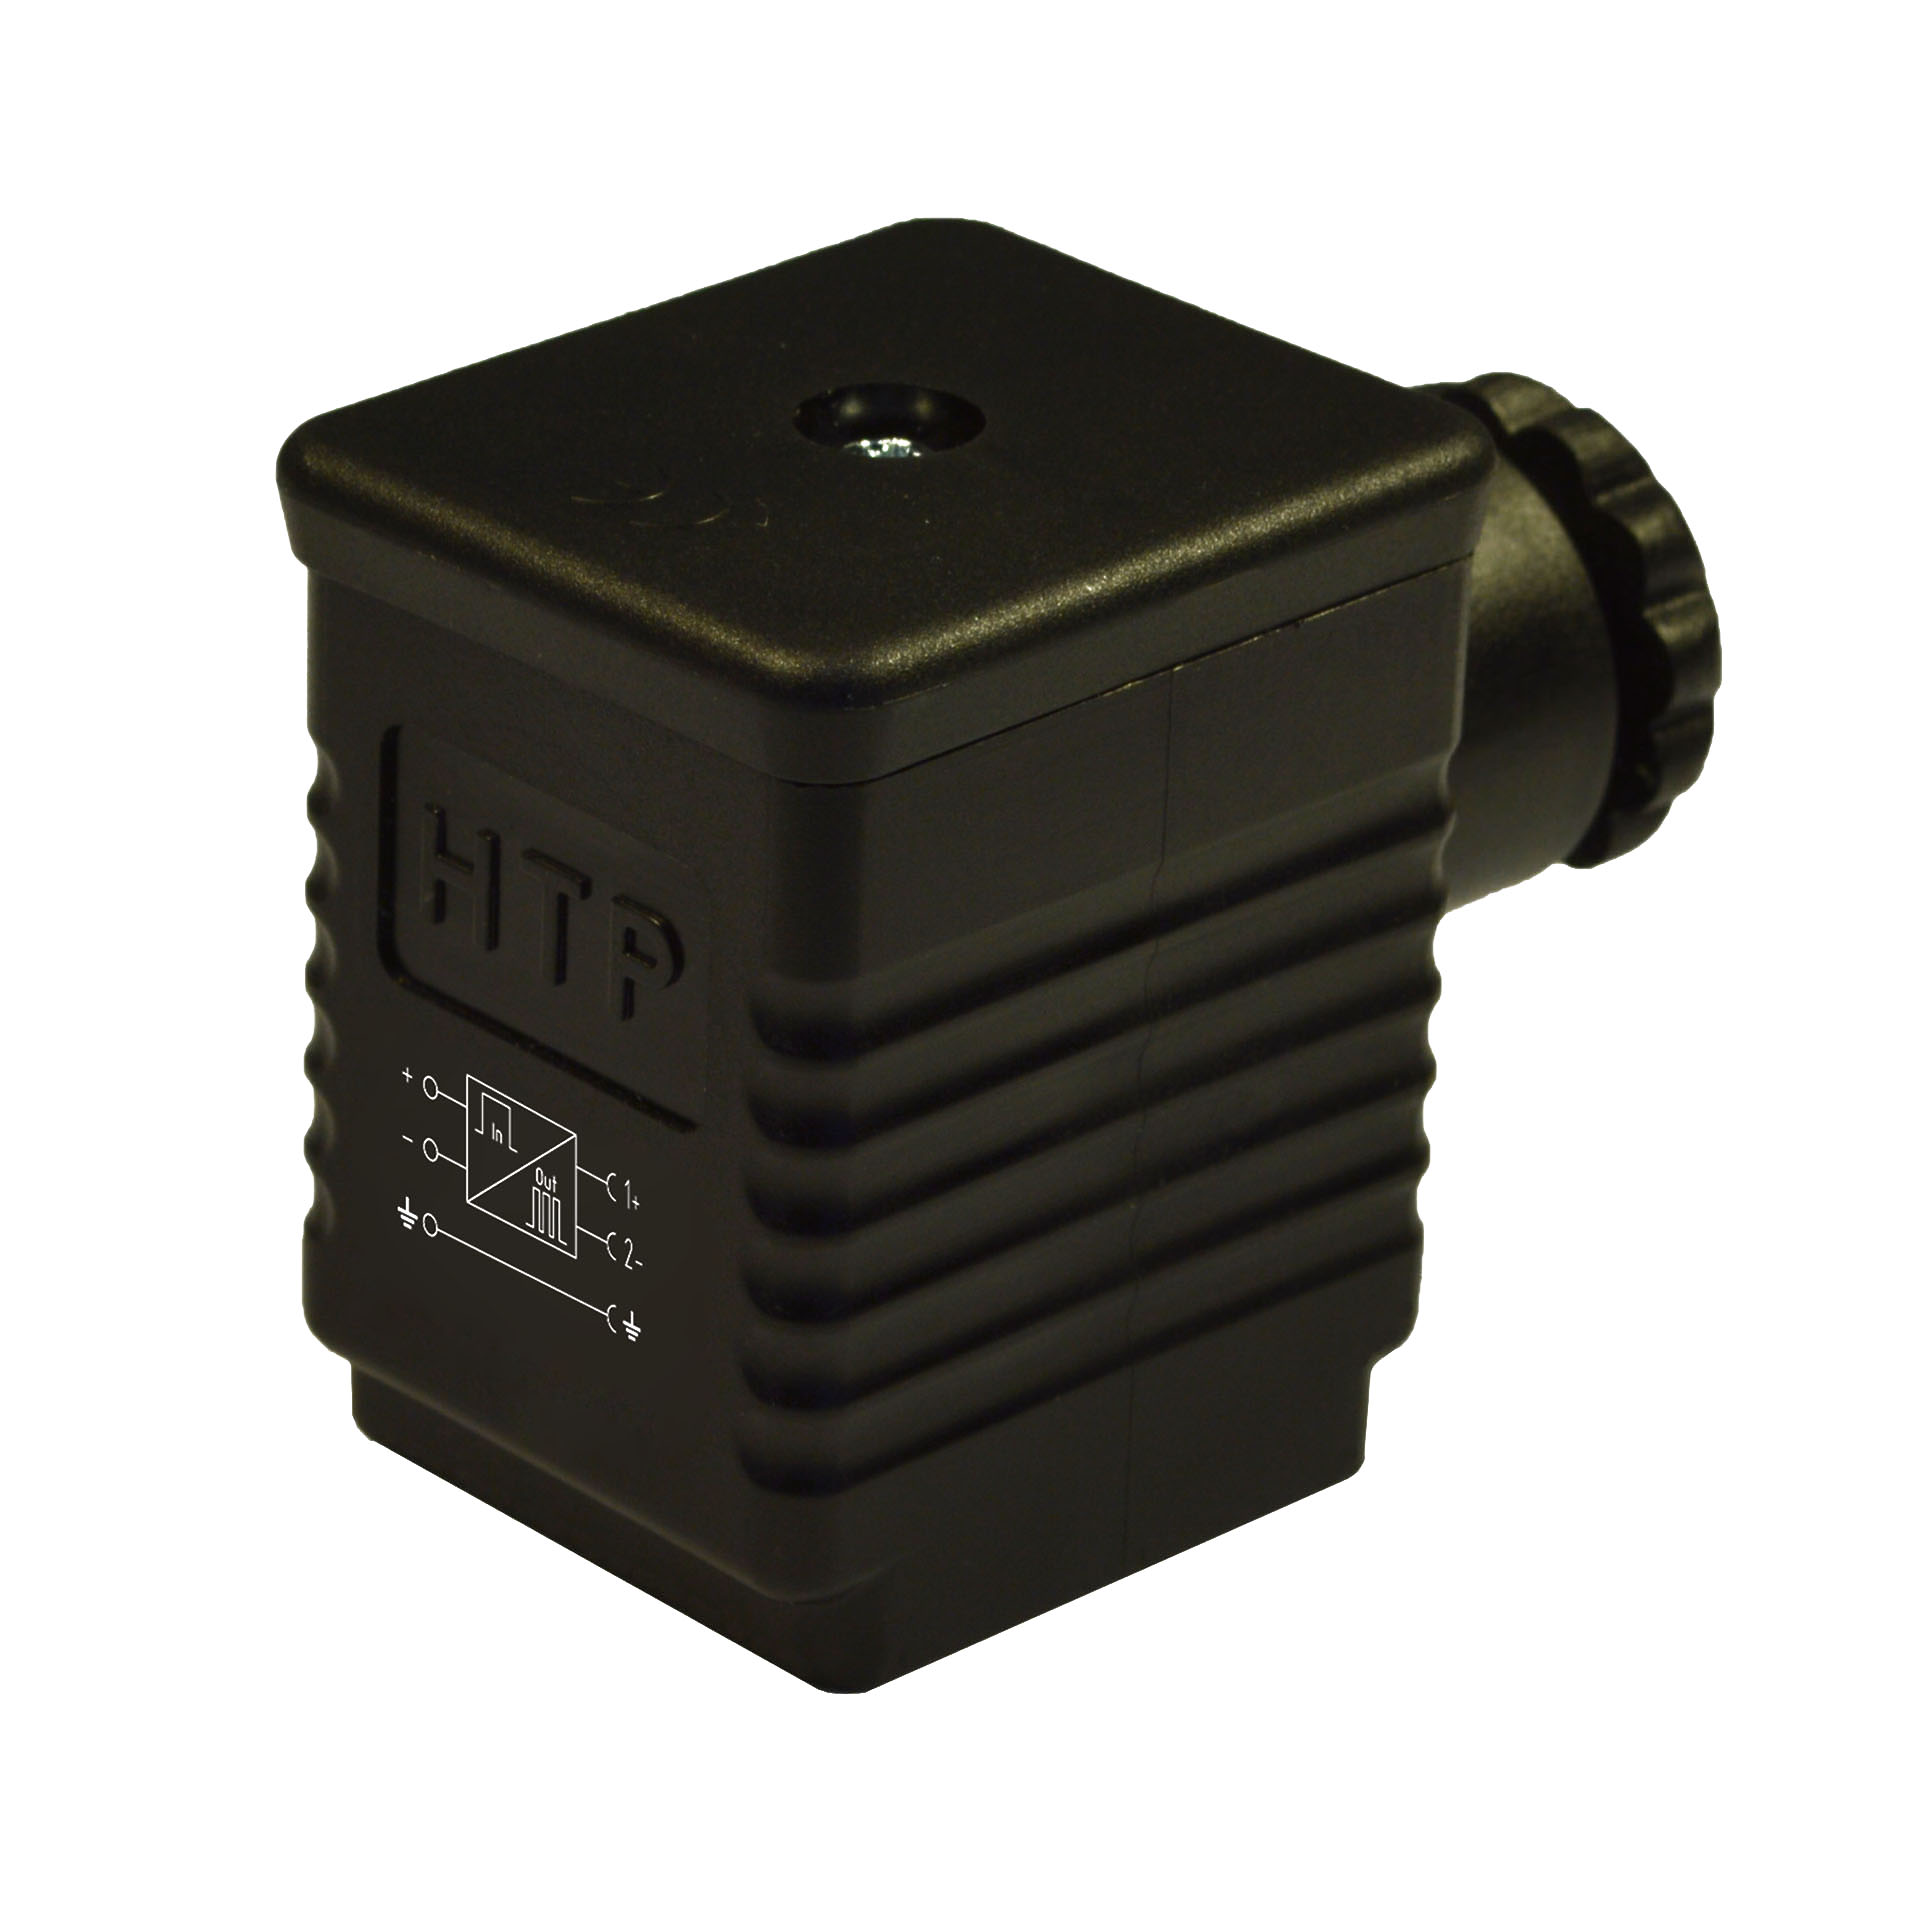 Square conn DIN 43650/A 27,5x27,5 - black - 18mm - 2p+E 12h - Energy saving 230V